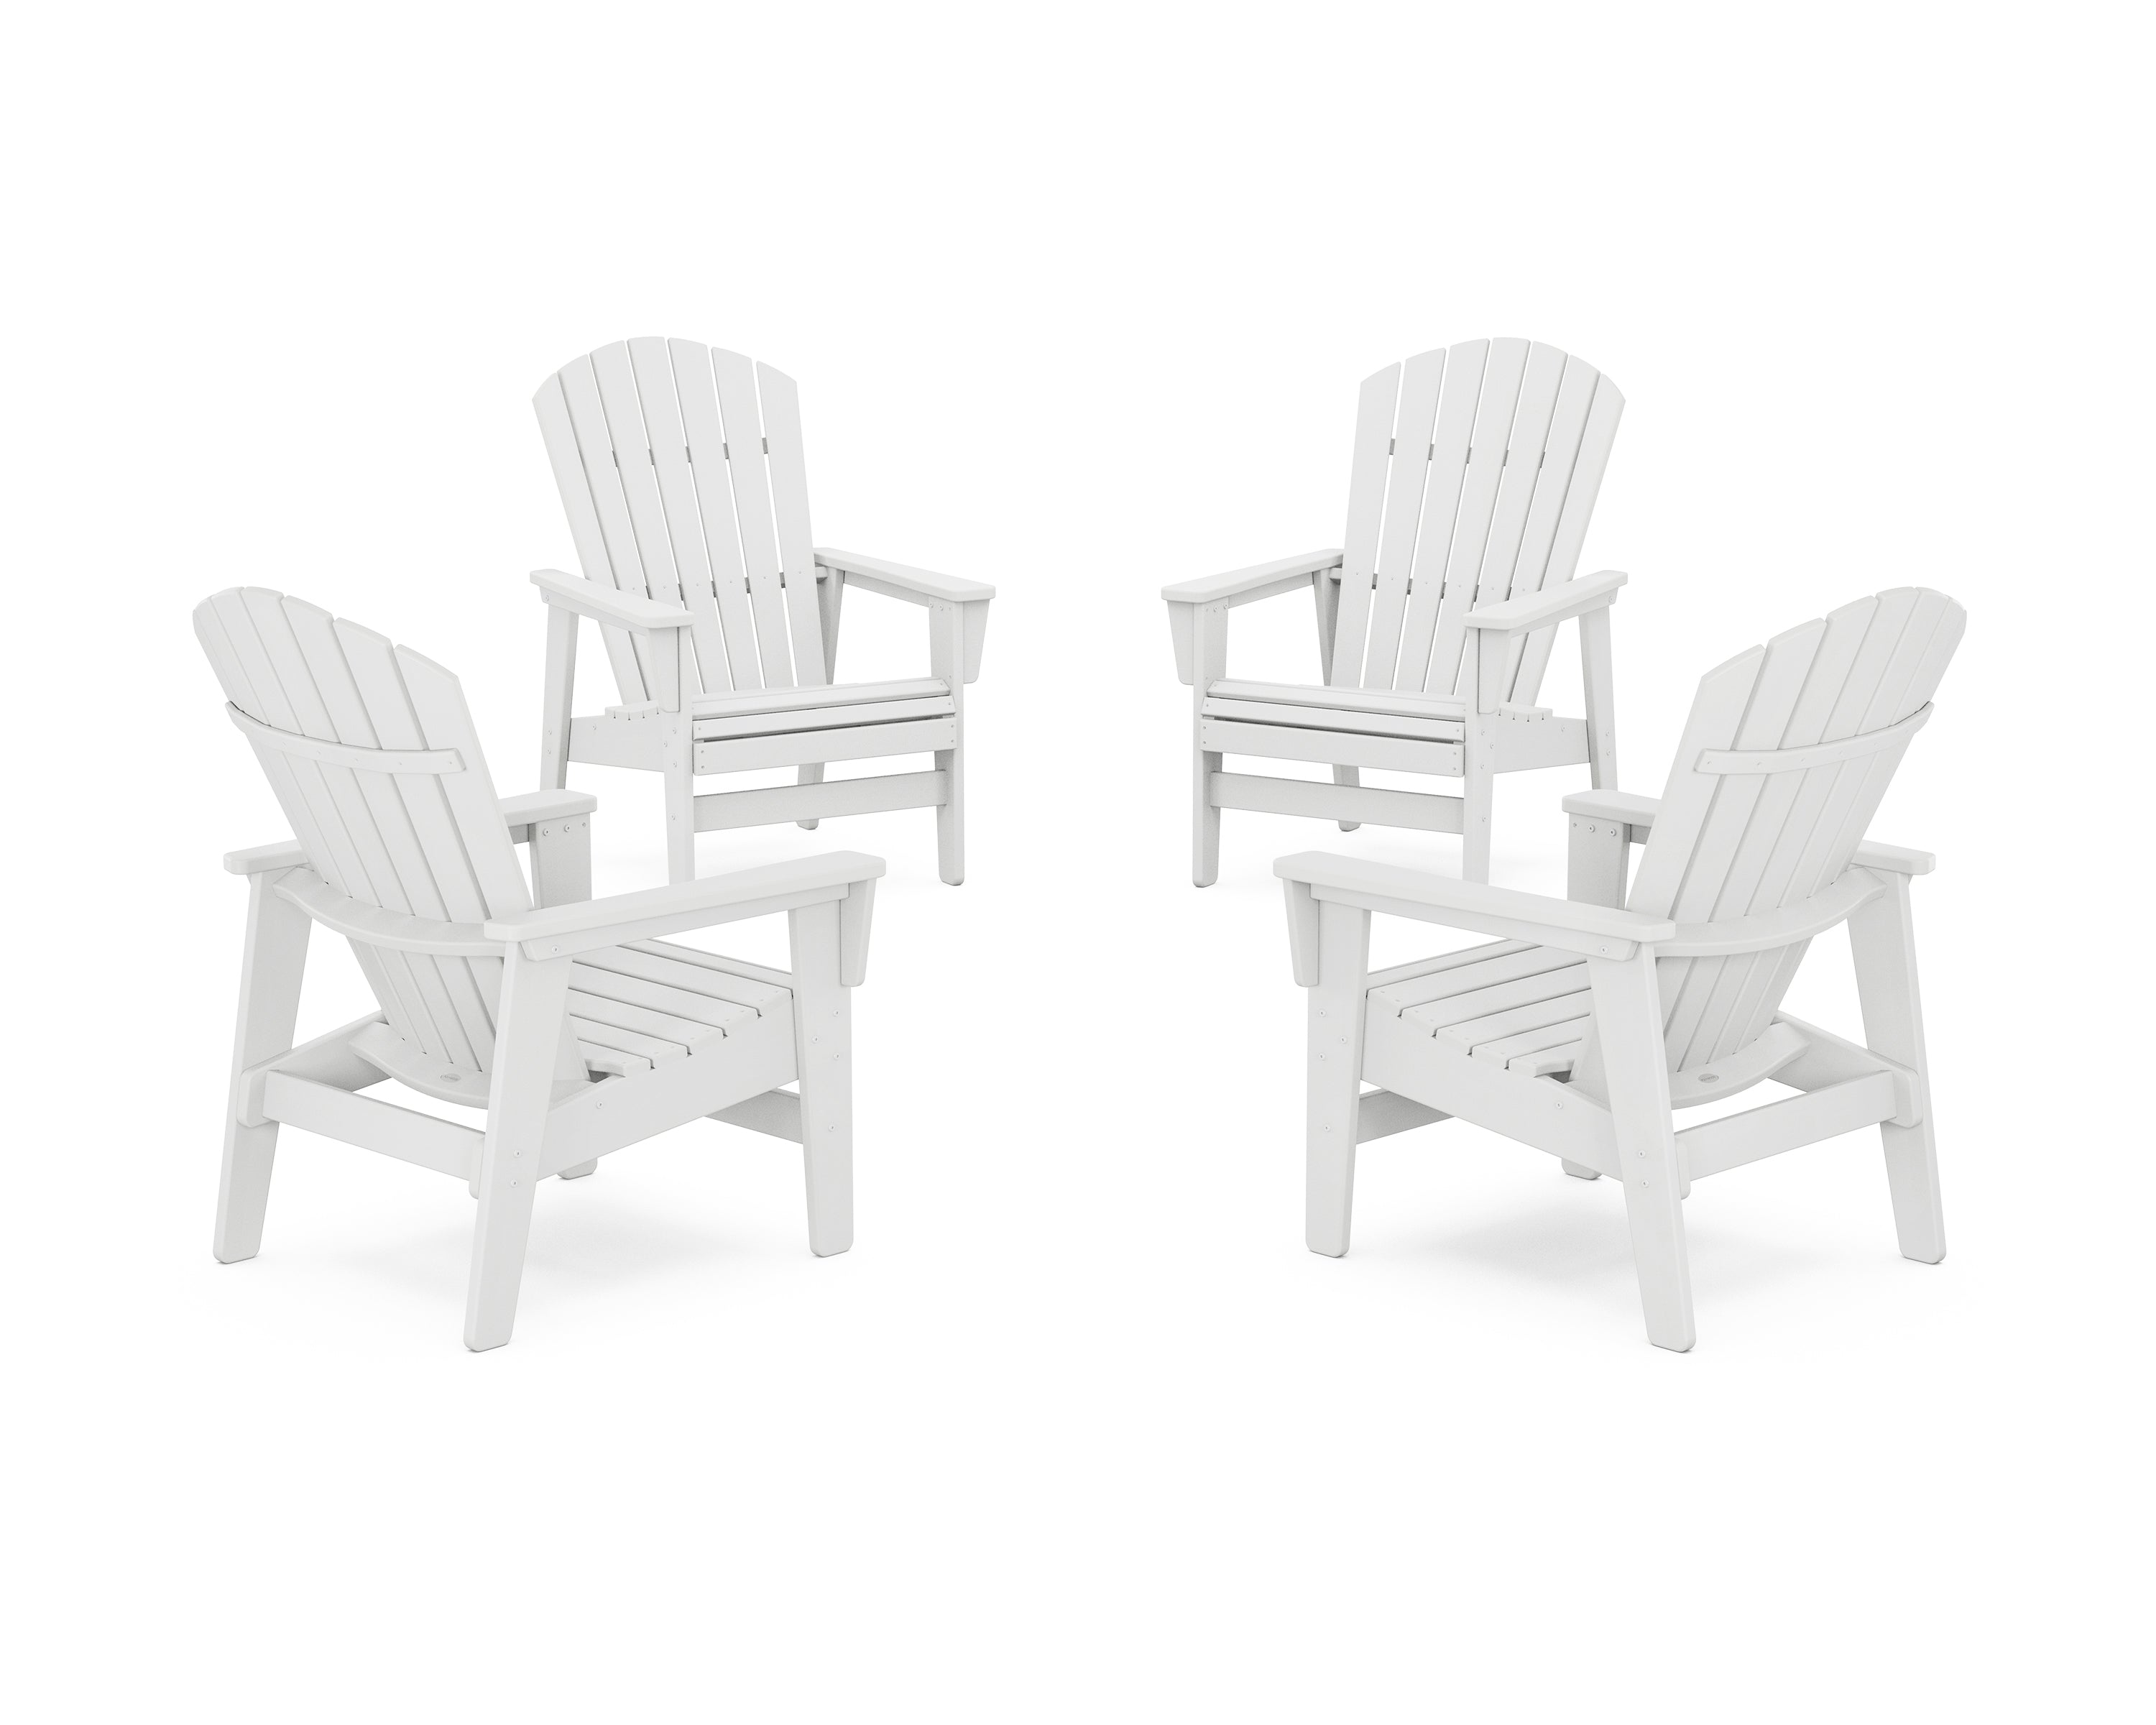 POLYWOOD® 4-Piece Nautical Grand Upright Adirondack Chair Conversation Set in White